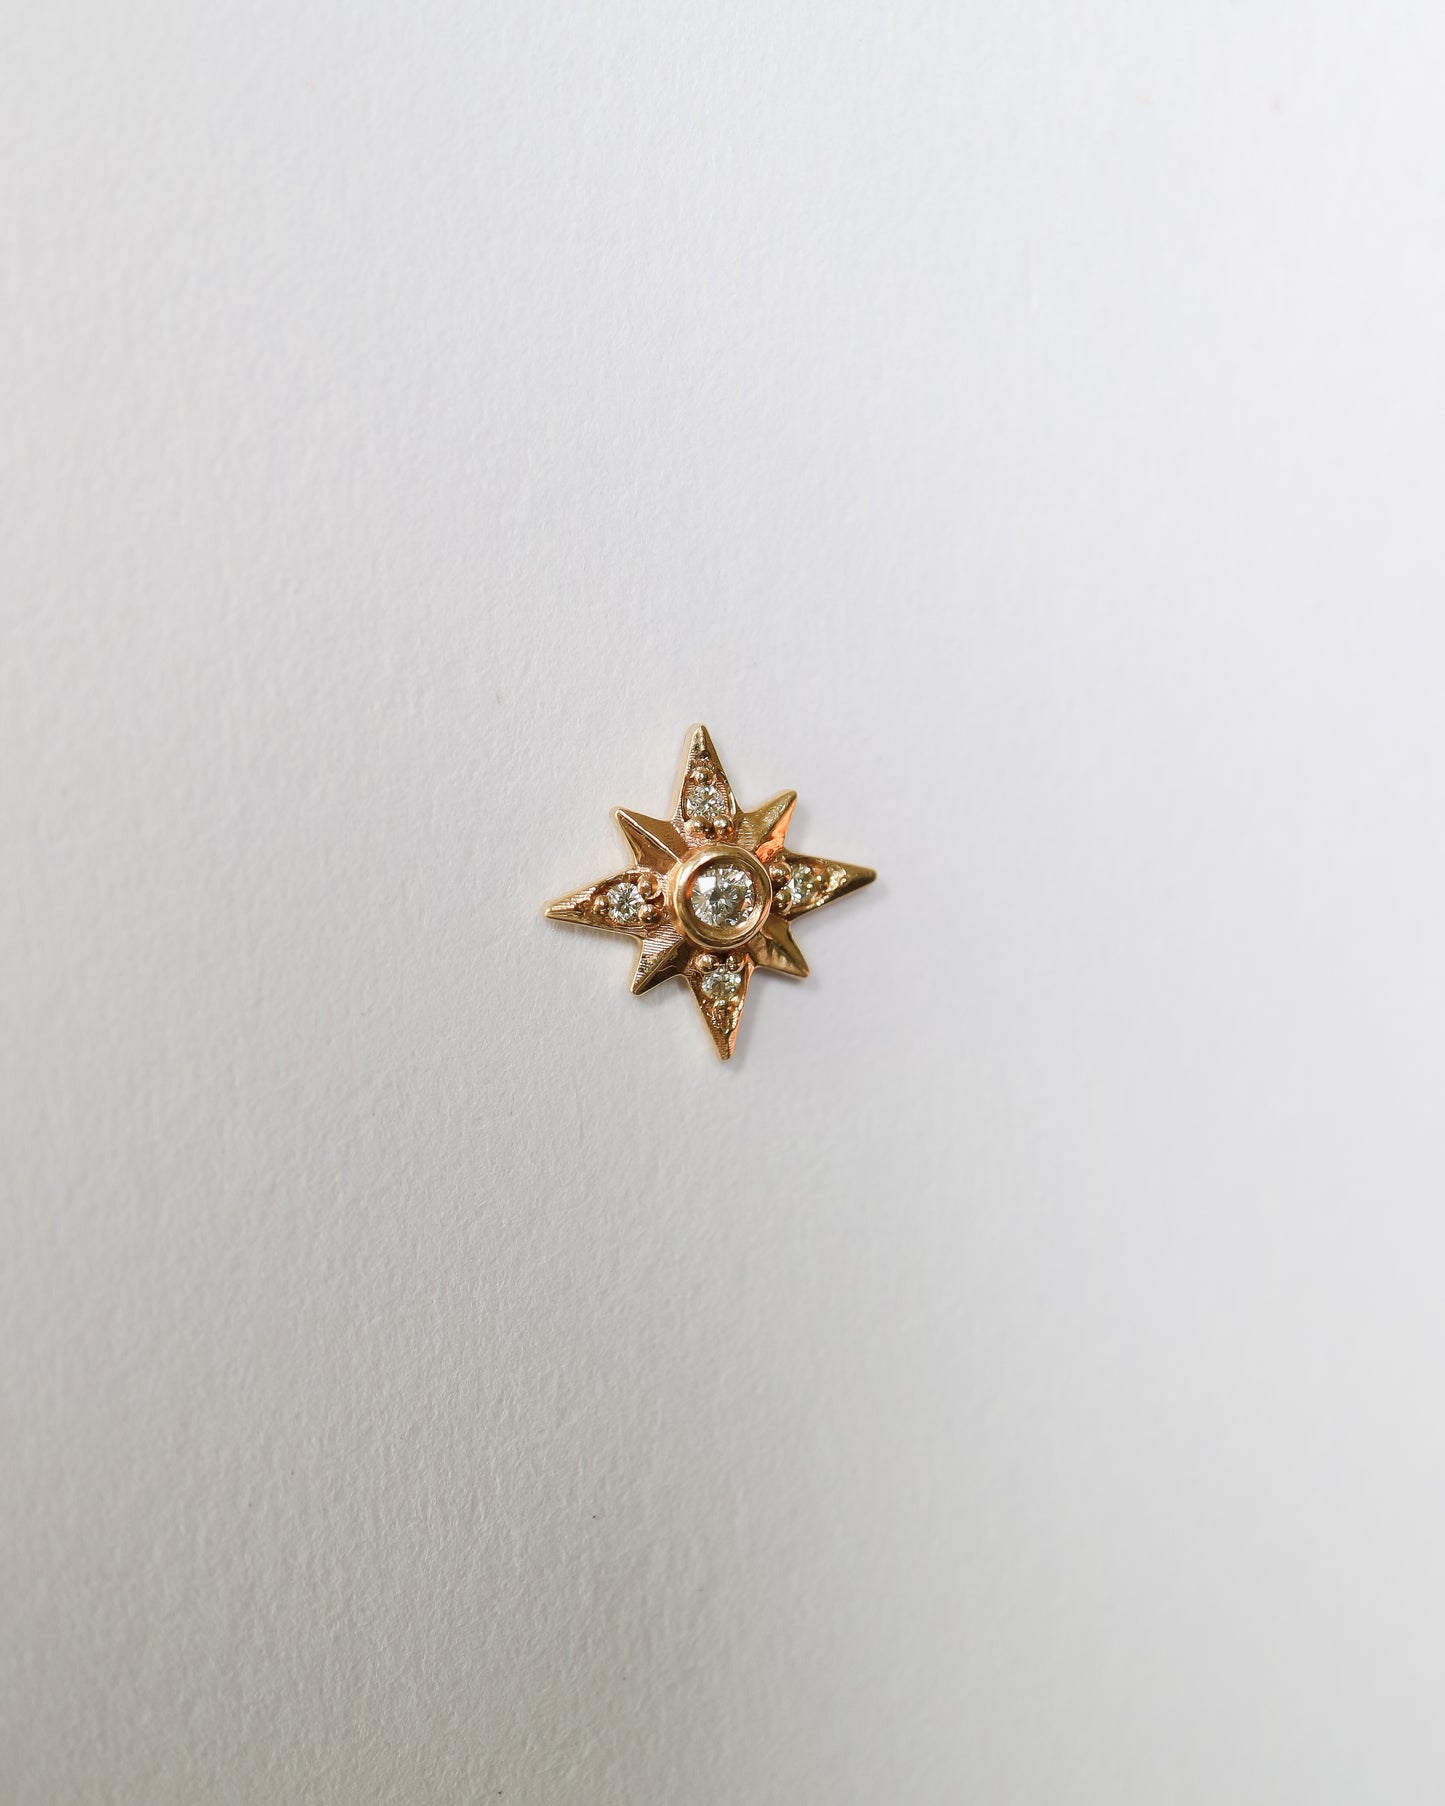 Diamond Star conch piercing stud helix piercing